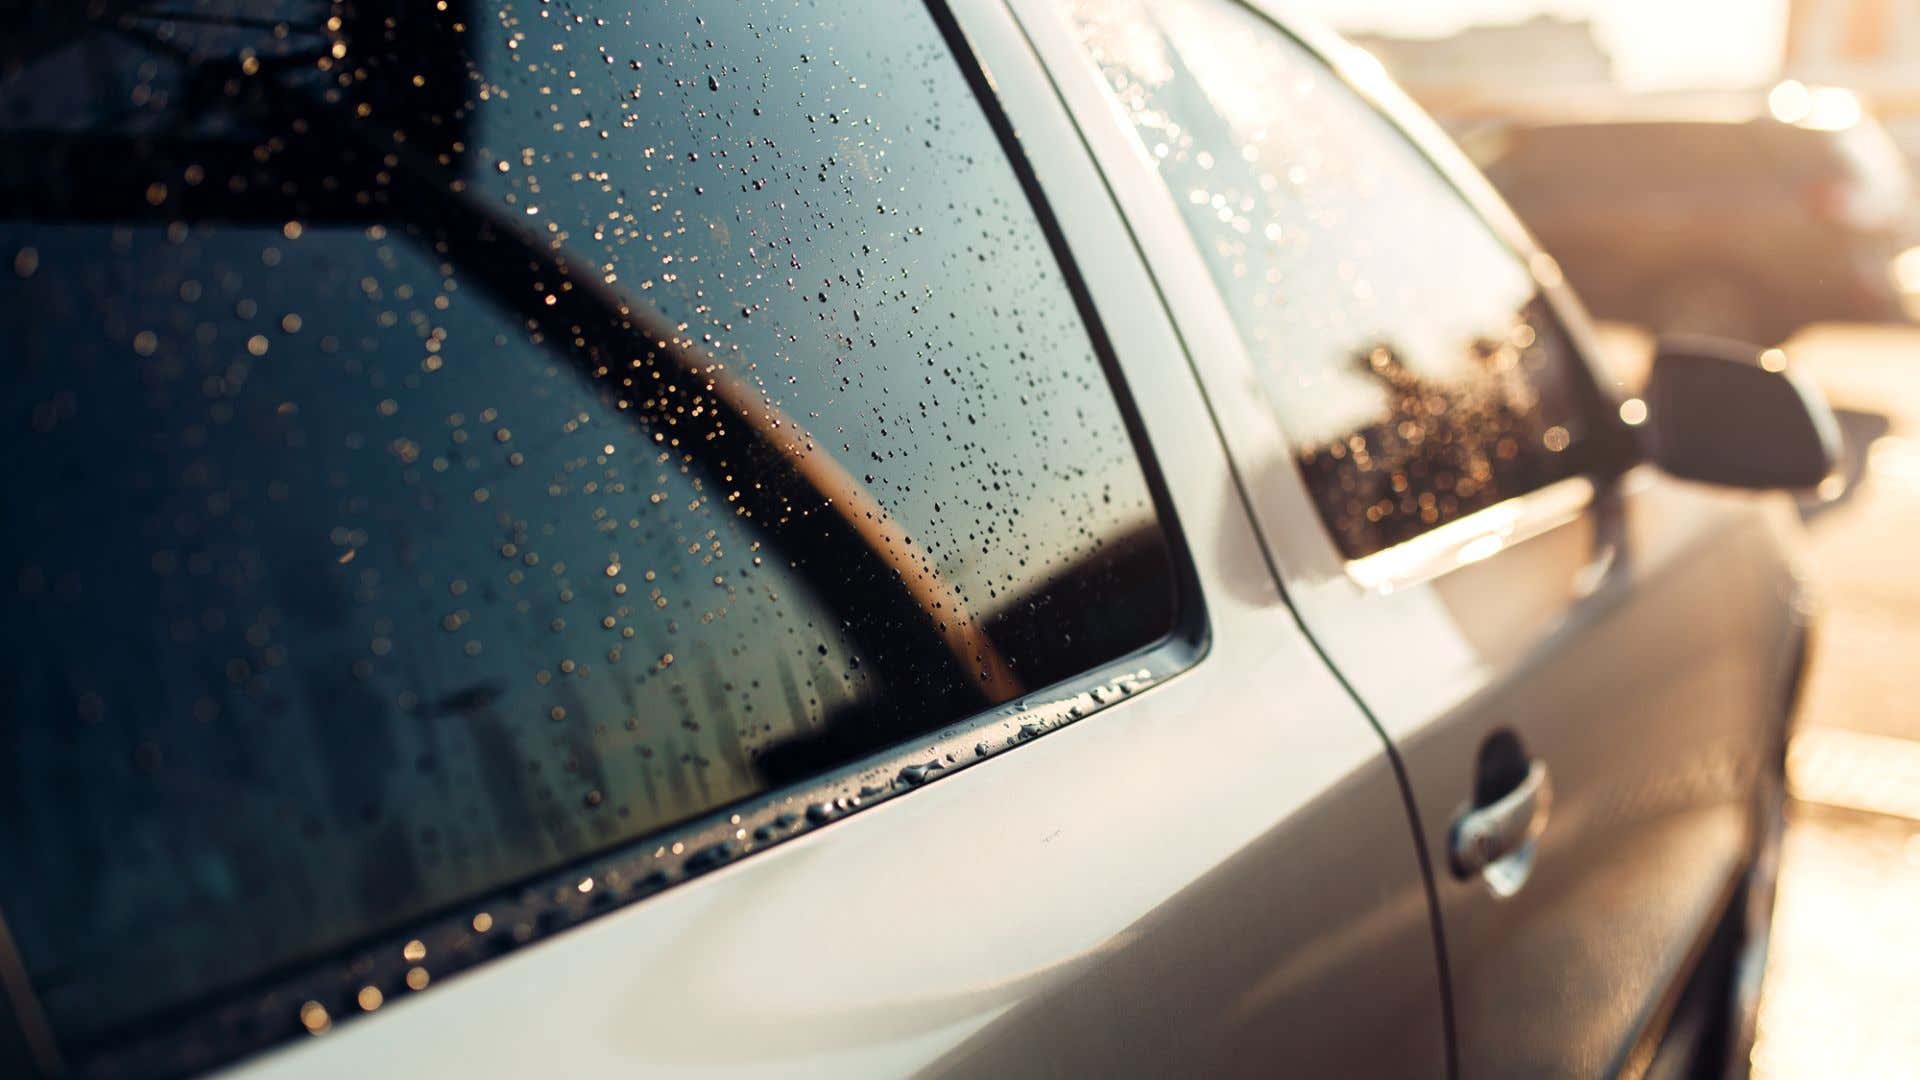 How To Clean Car Windows